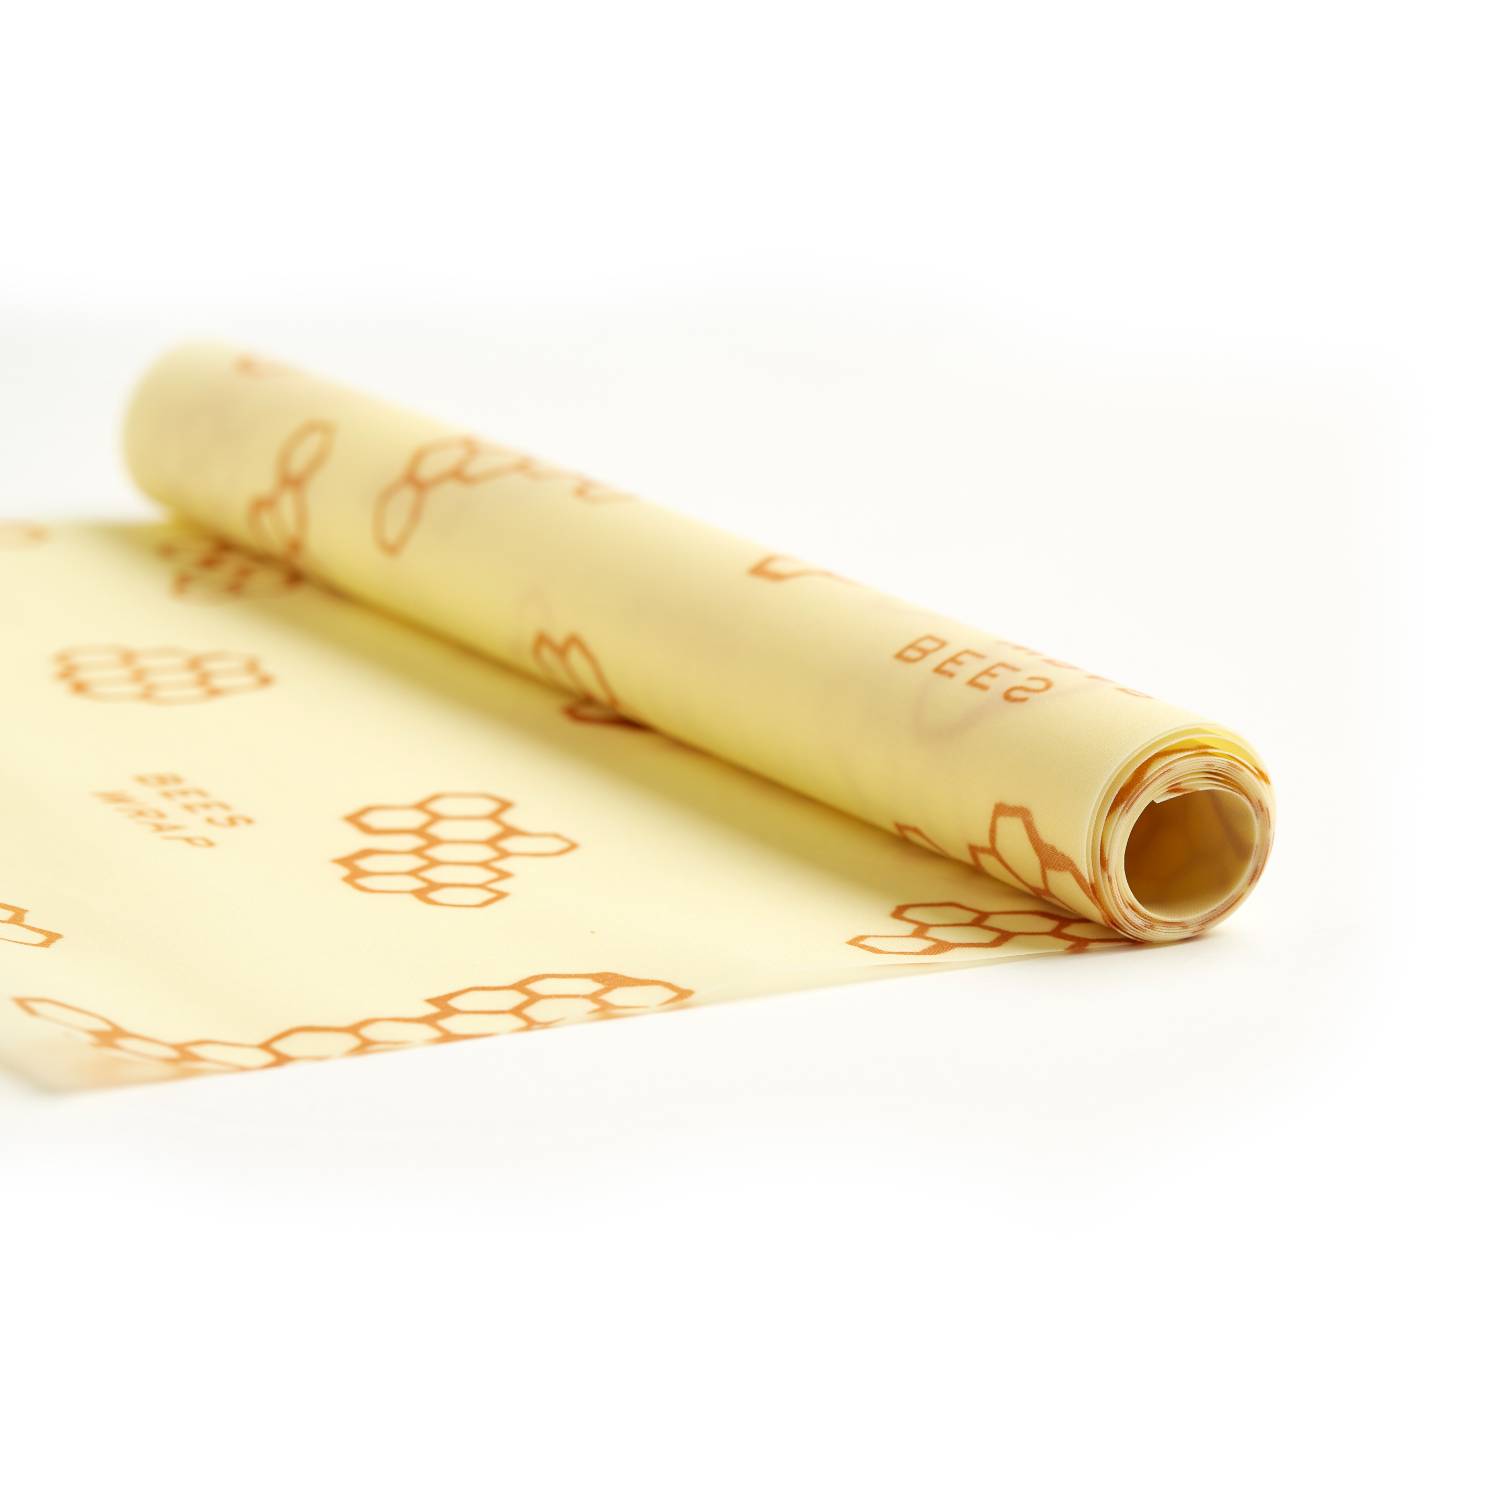 Cling wrap: Polyethylene based eco-friendly wrap to keep your food fresh